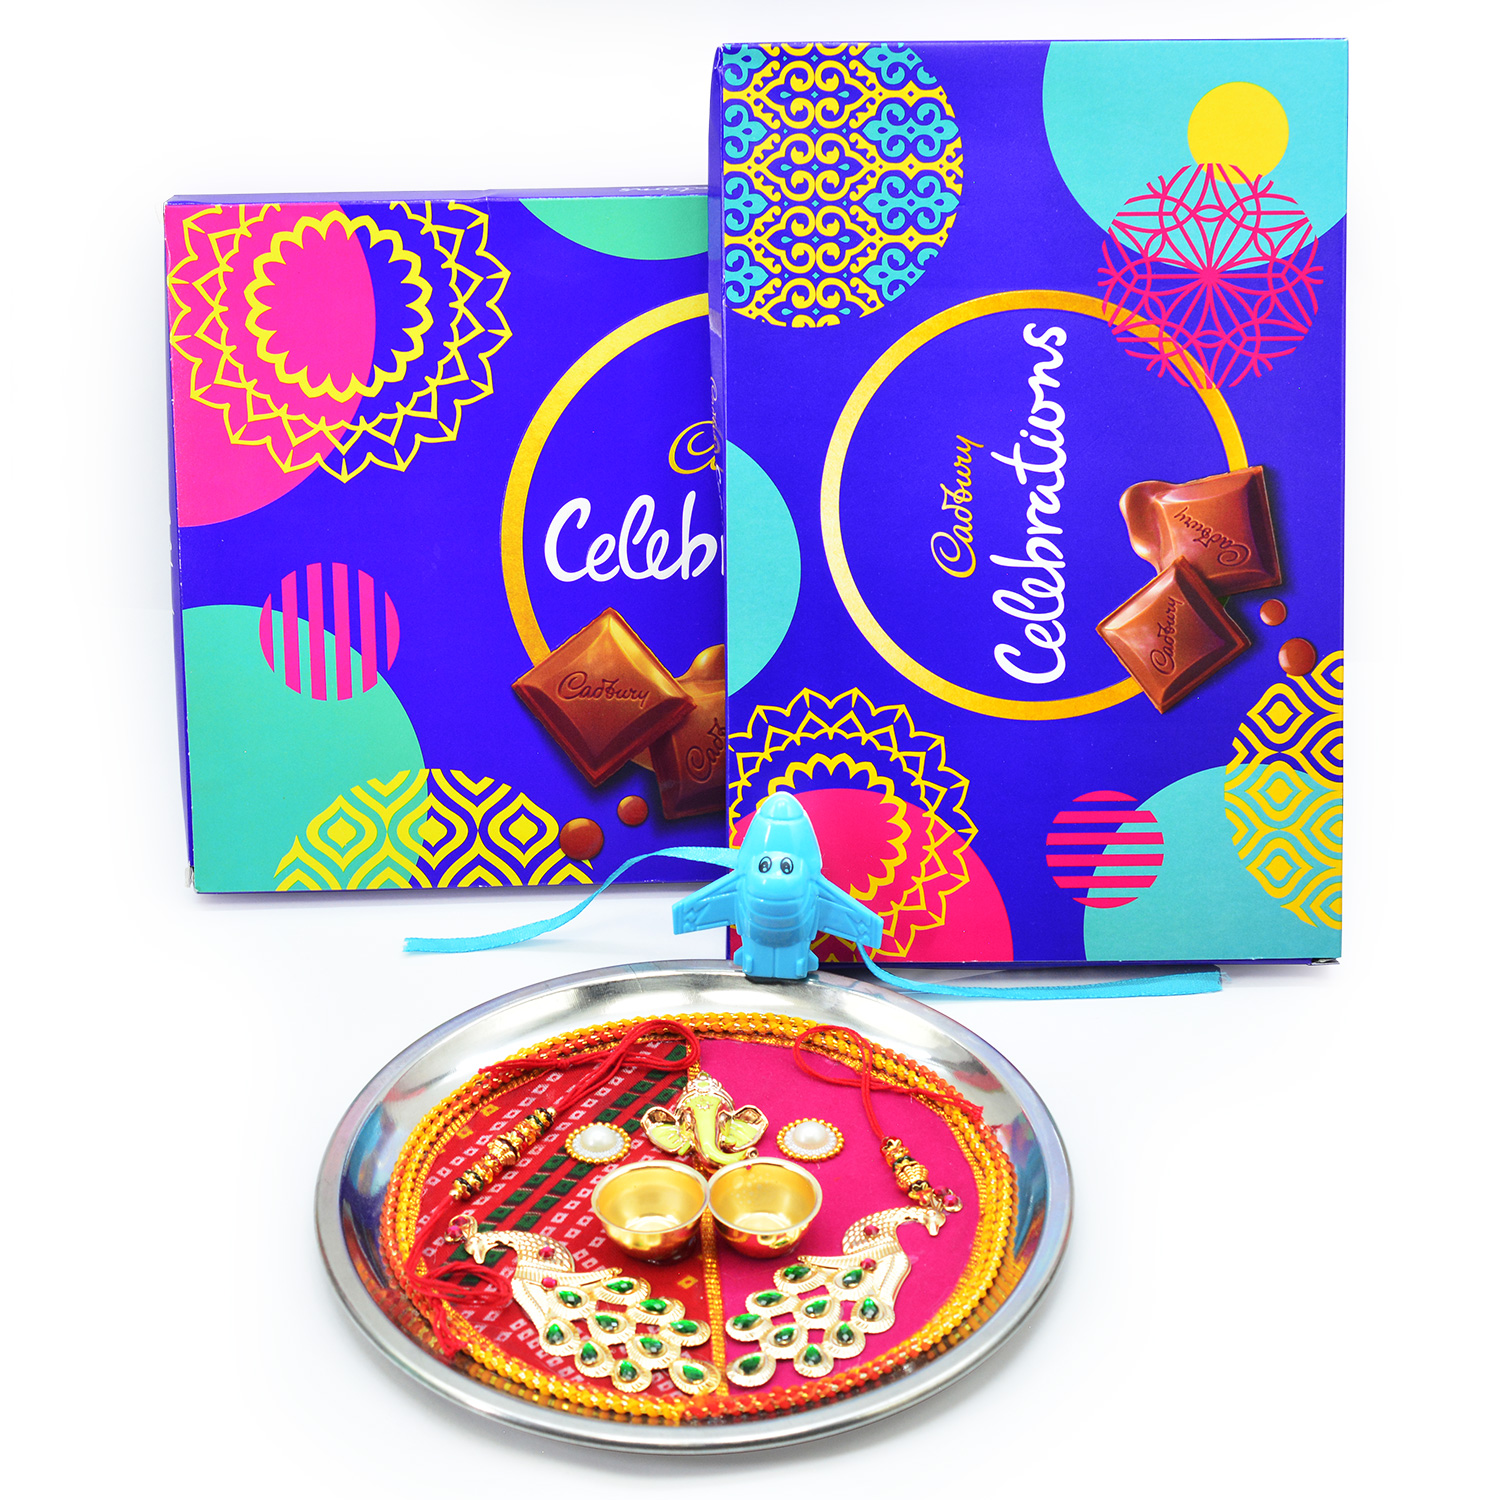 Cadbury Celebrations Chocolates Packs with Bhaiya Bhabhi and Kid Rakhi along with Rakhi Pooja Thali